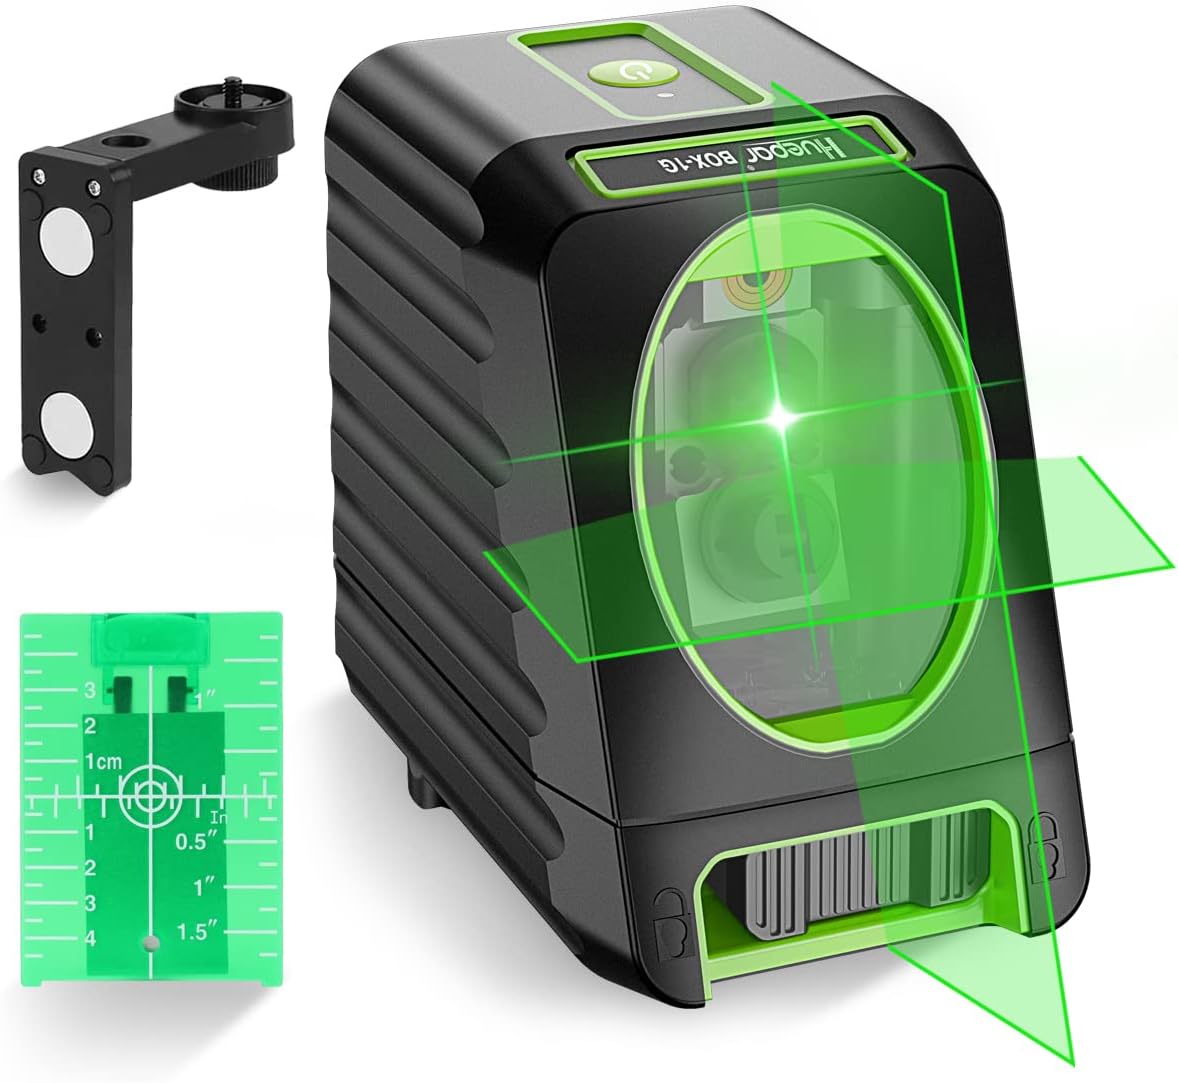 Huepar BOX-1G Green Laser Level Review